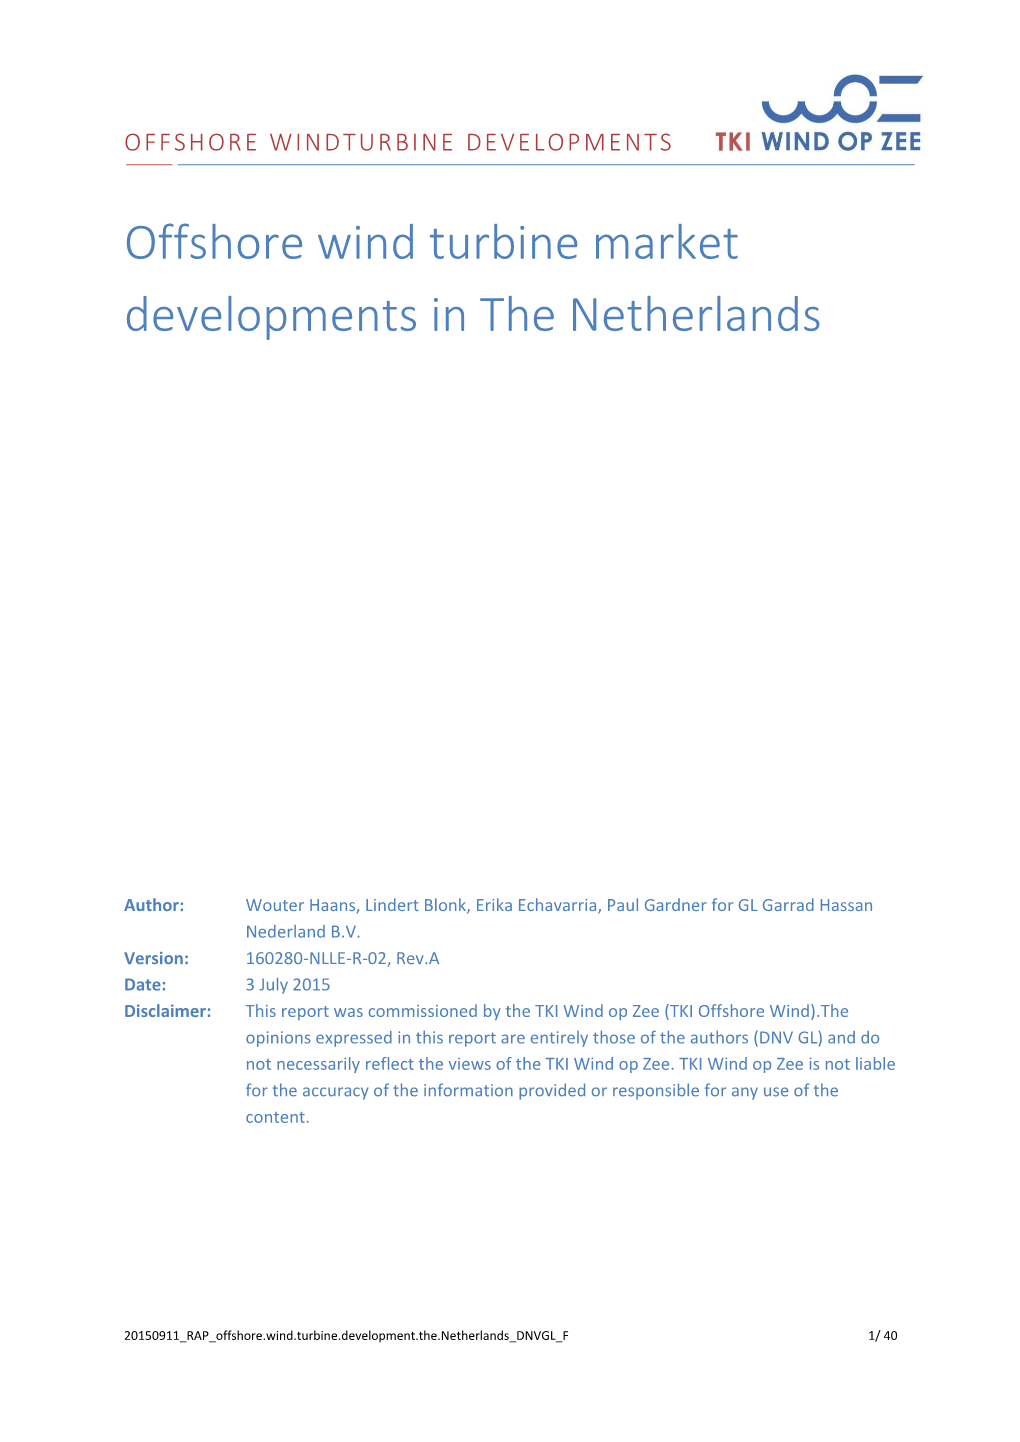 Offshore Wind Turbine Market Developments in the Netherlands